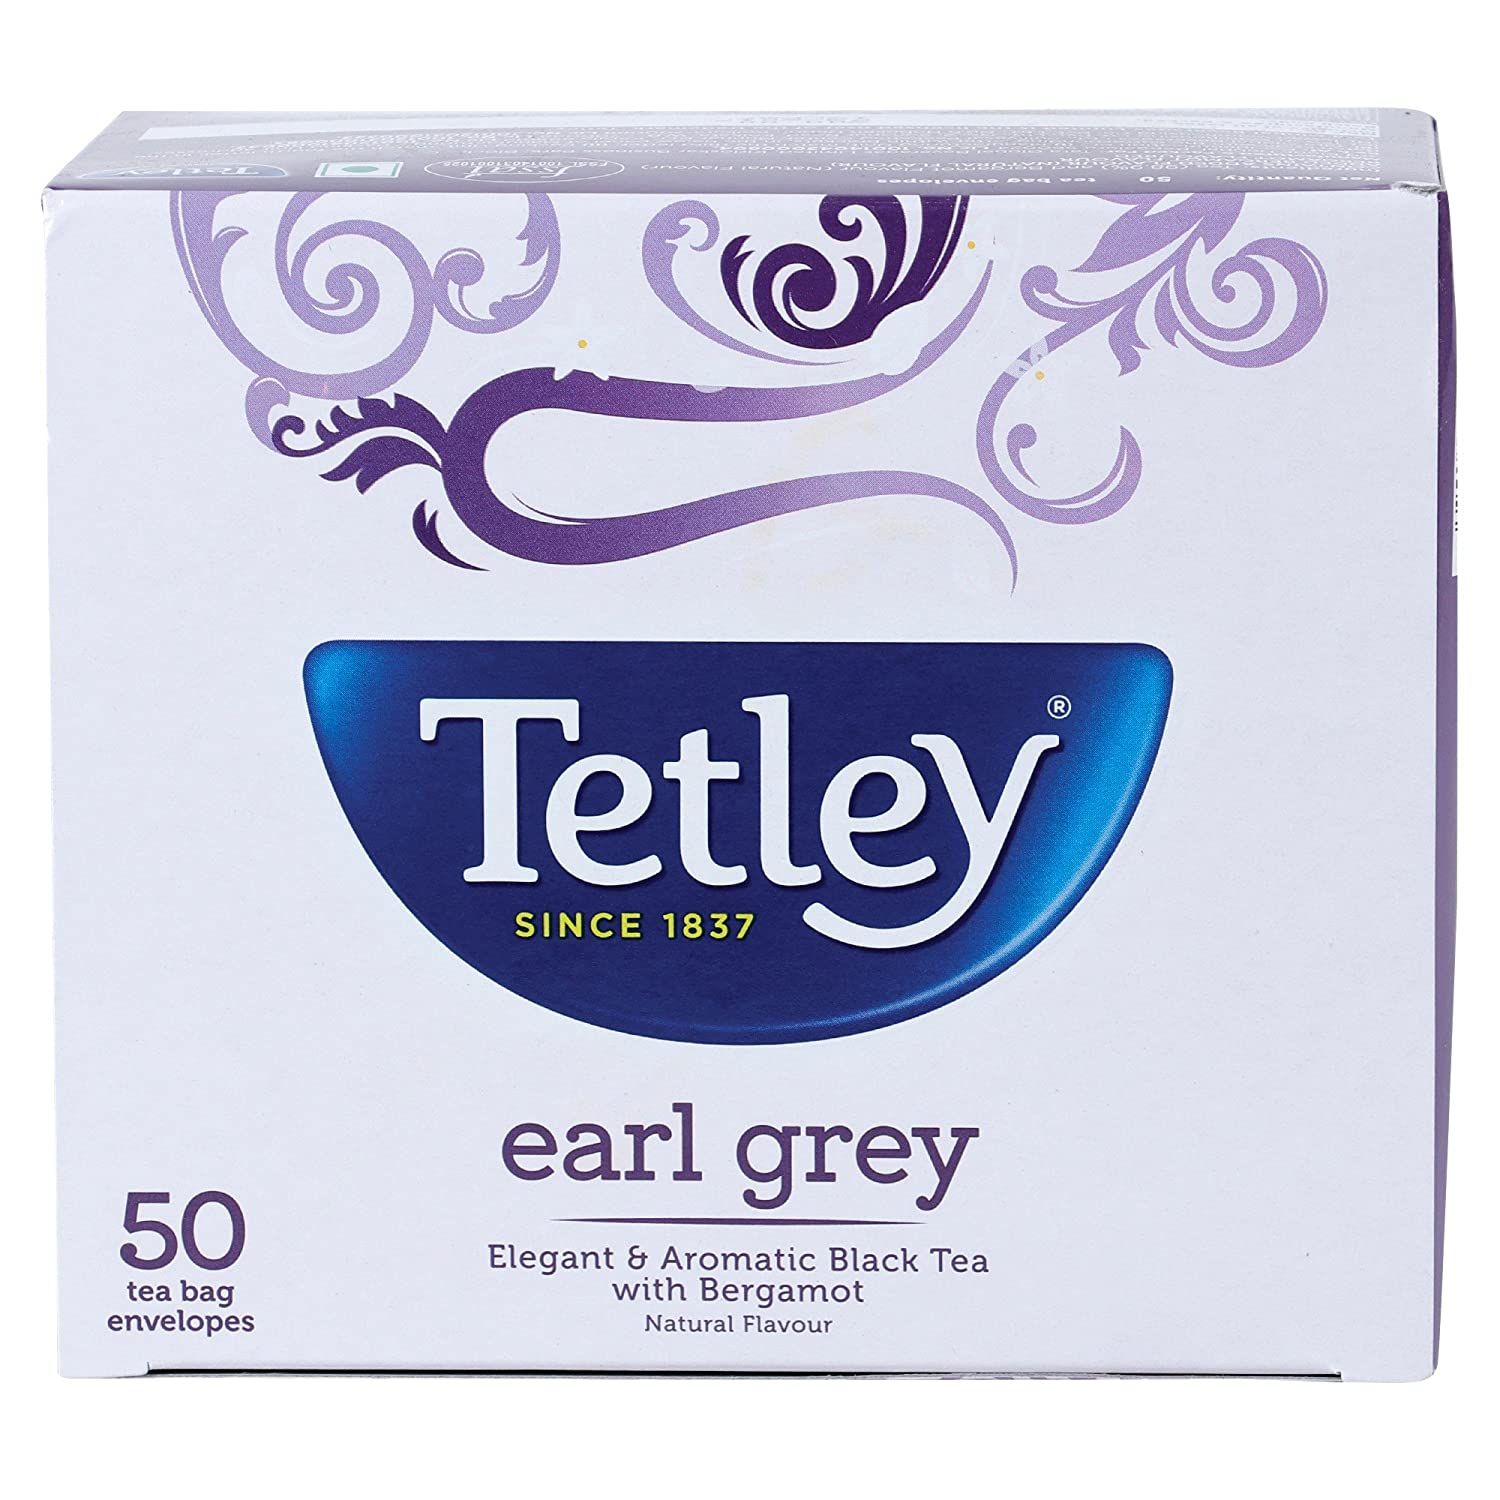 Tetley Flavour Tea Earlgray Image